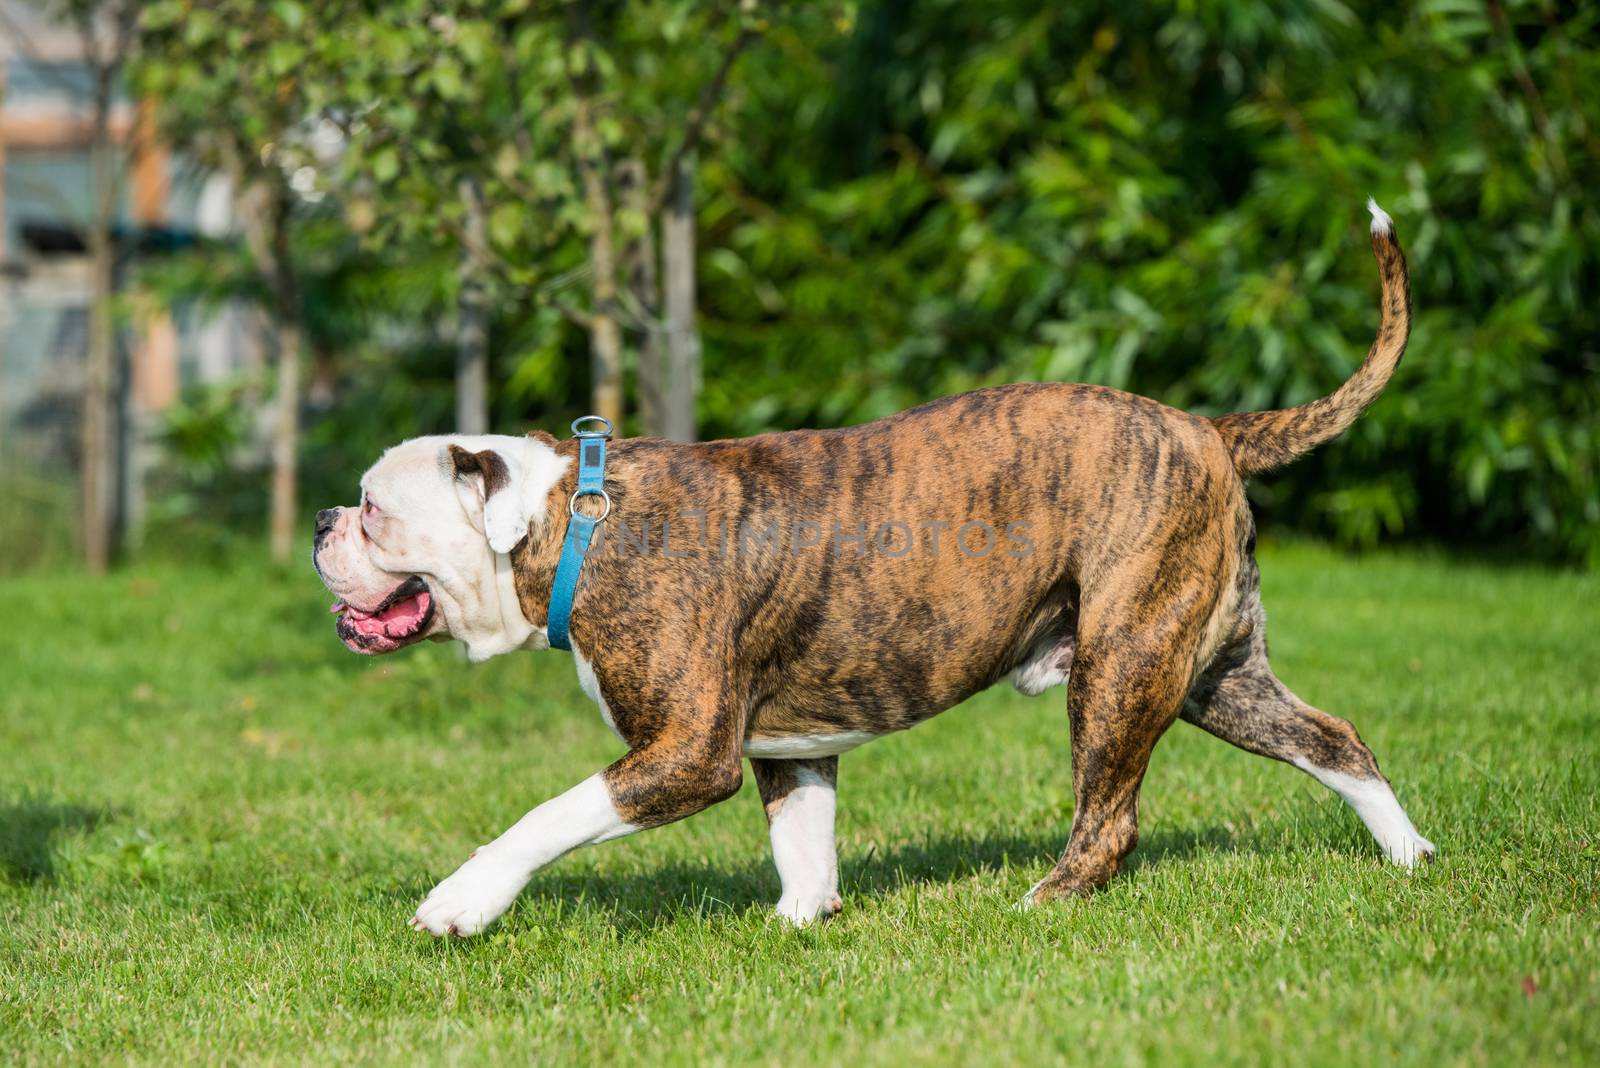 Brindle coat American Bulldog dog in running on grass in the yard